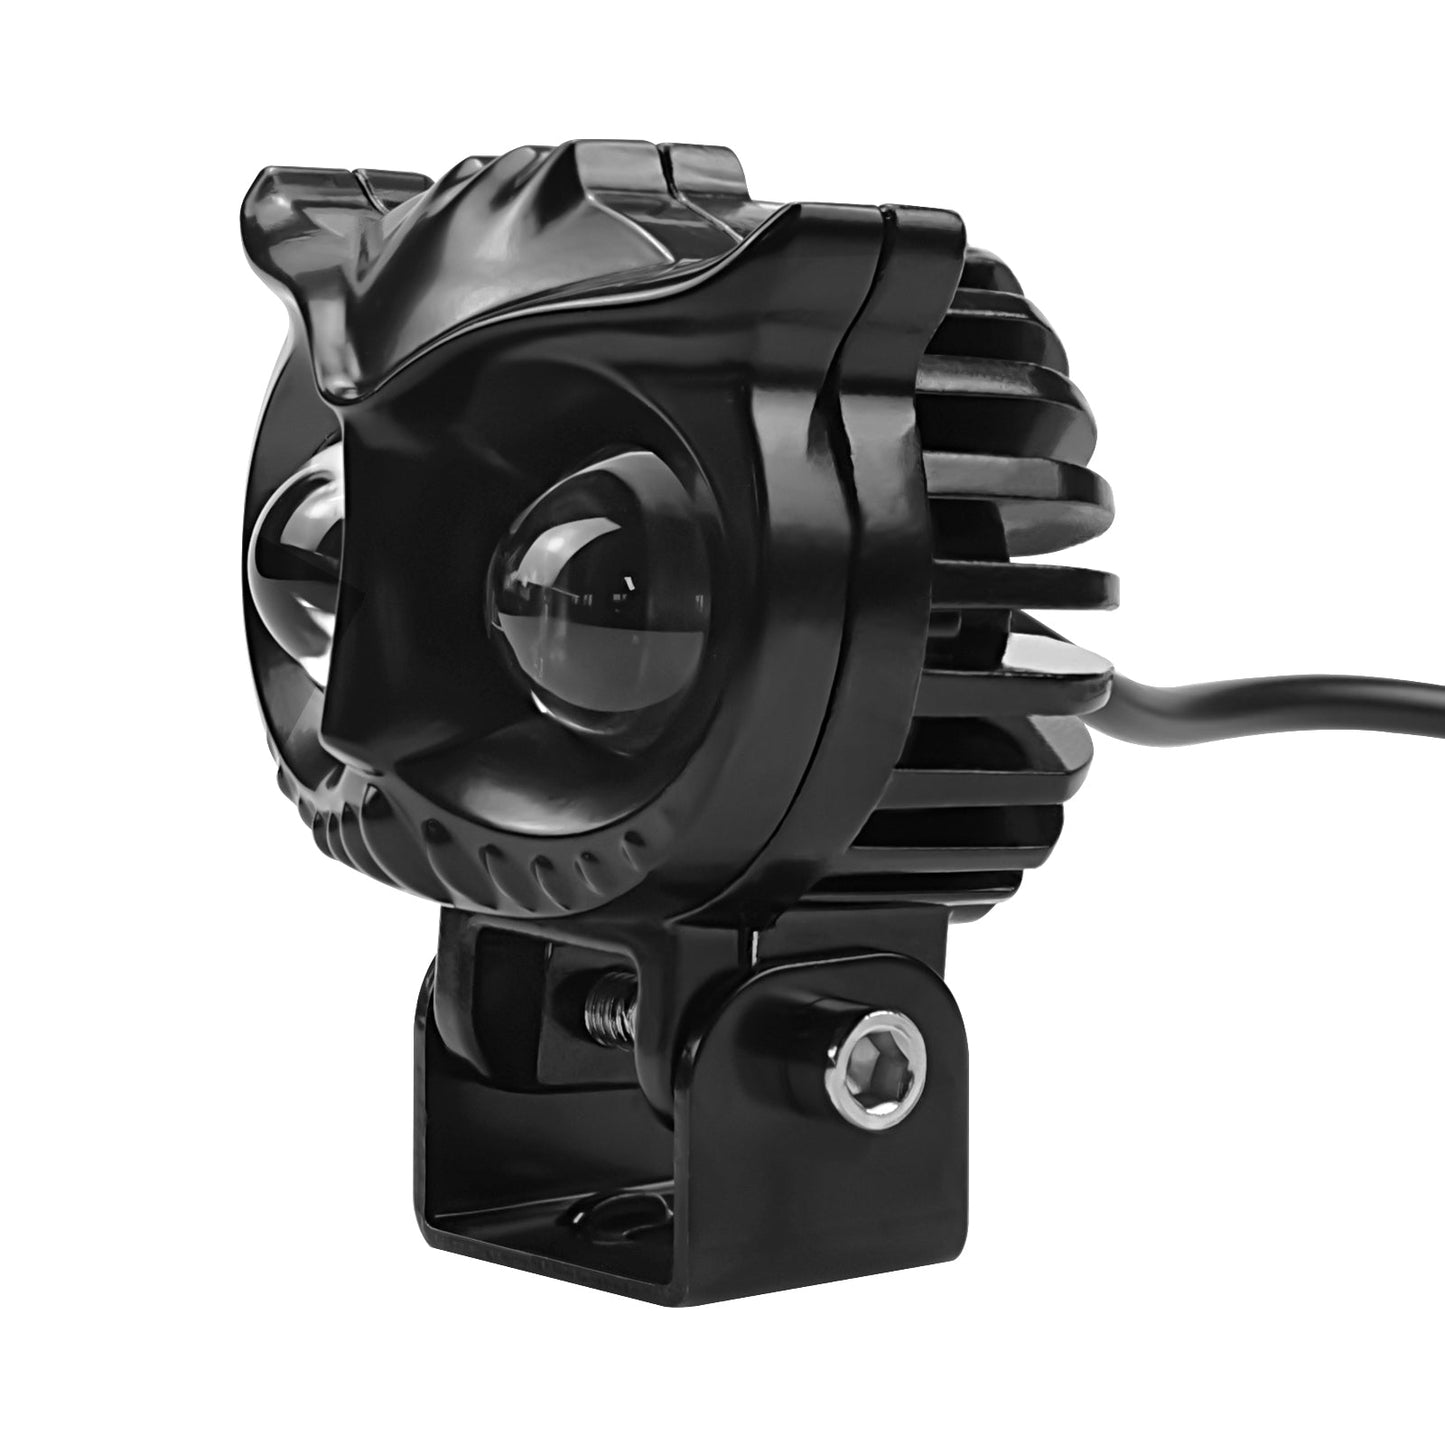 Electric Led Worklight Spotlight Front Waterproof Headlight 30 45W Owl For Motor